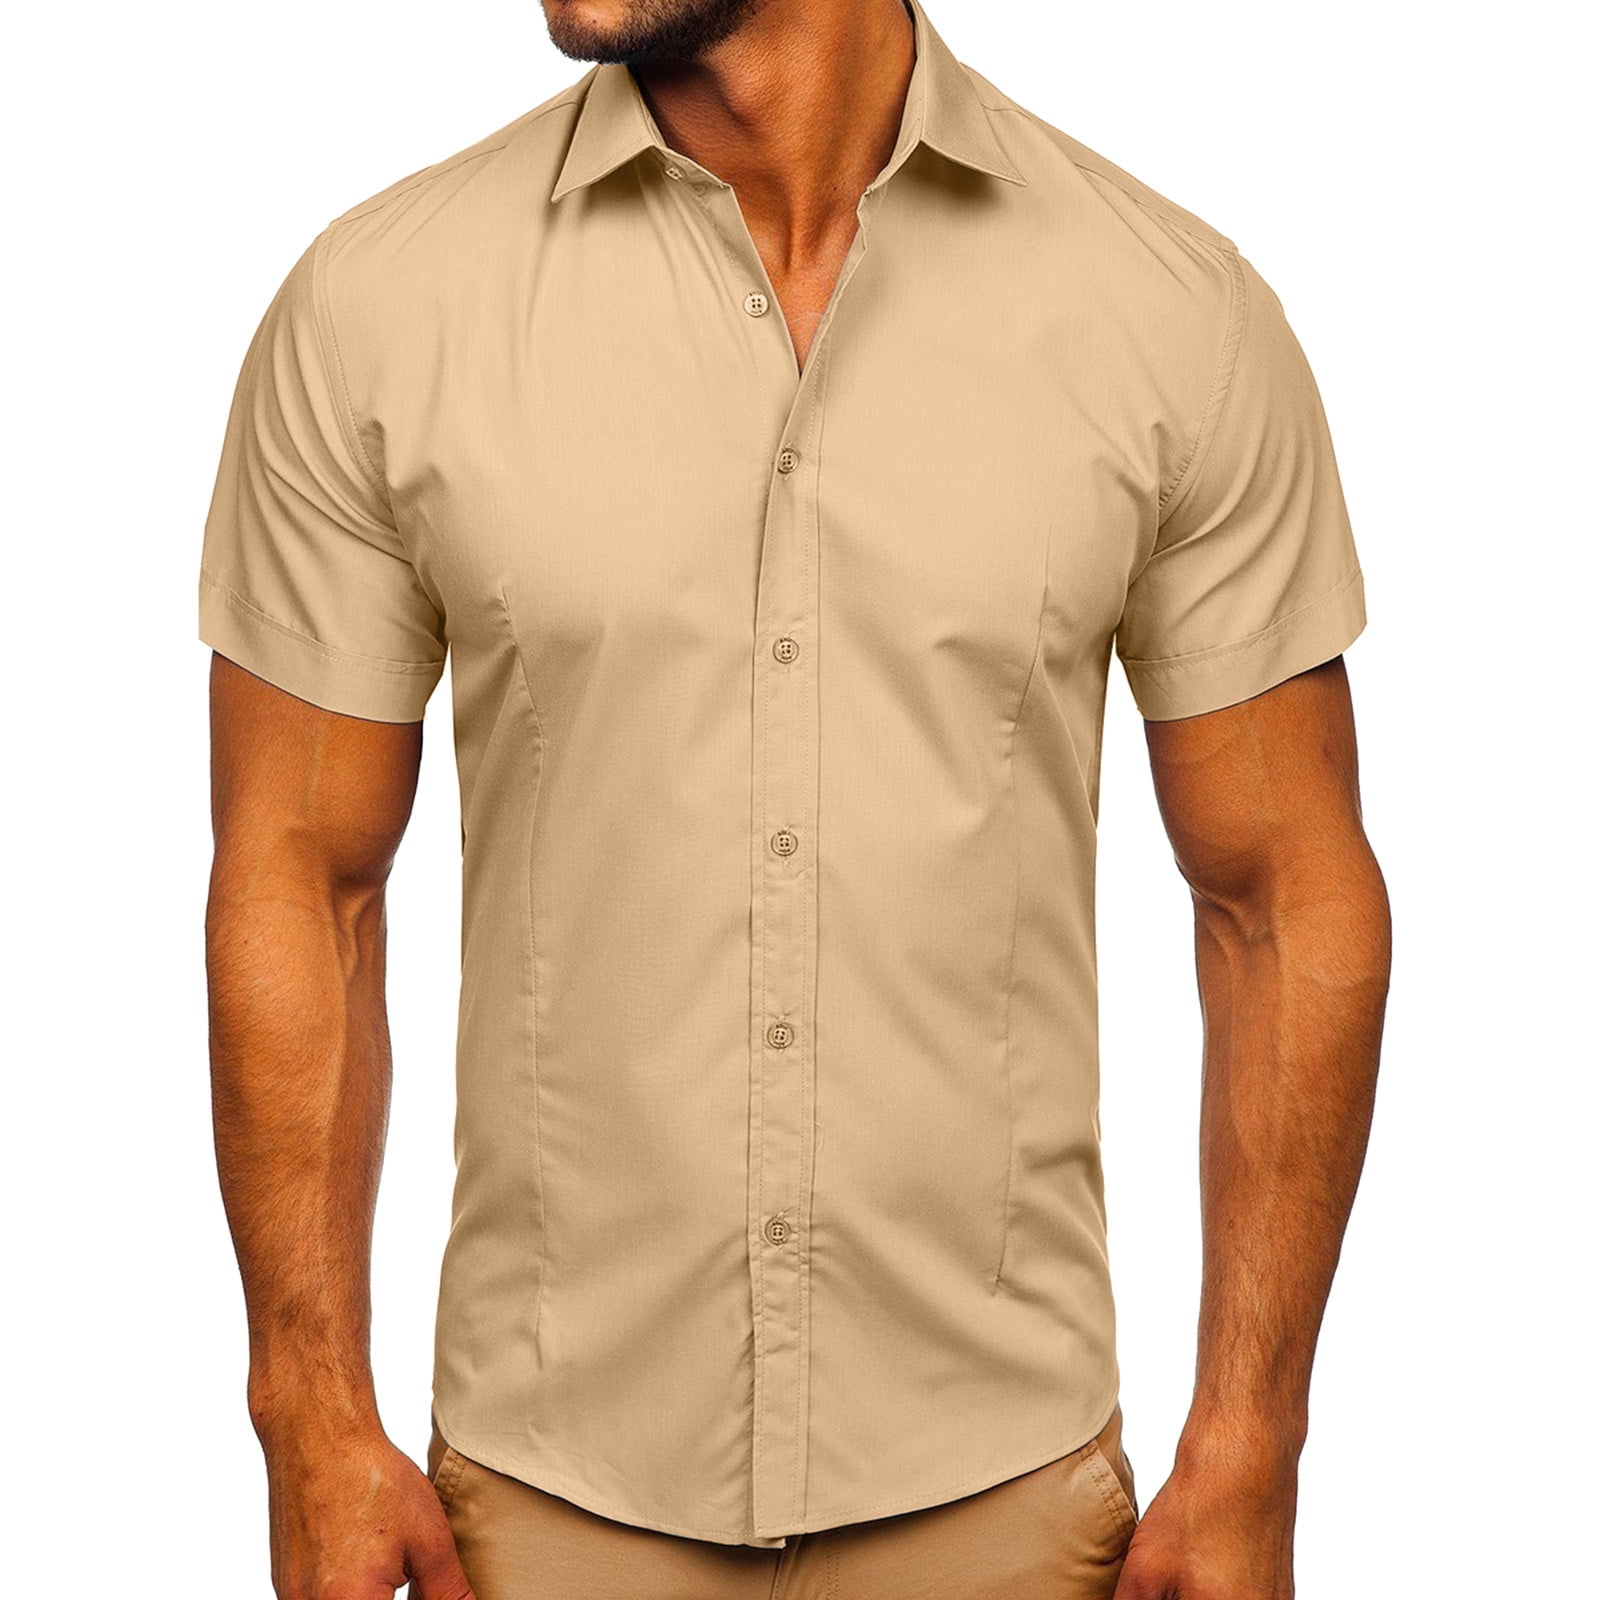  Runcati Mens Button Up Shirts Long Sleeve Linen Beach Casual  Cotton Summer Lightweight Tops (Medium, 1 Black) : Clothing, Shoes & Jewelry